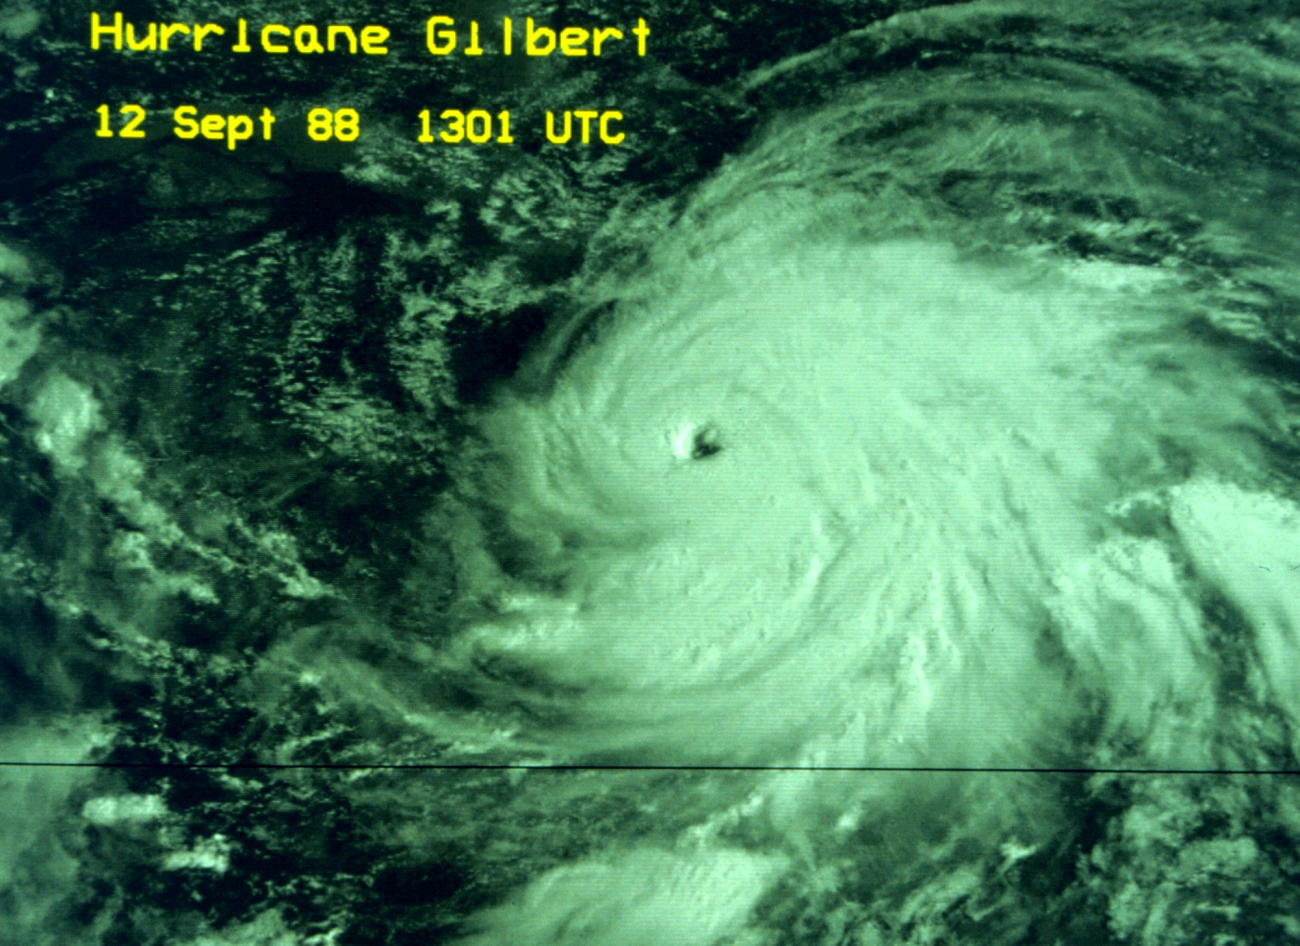 Hurricane Gilbert in the Caribbean Sea